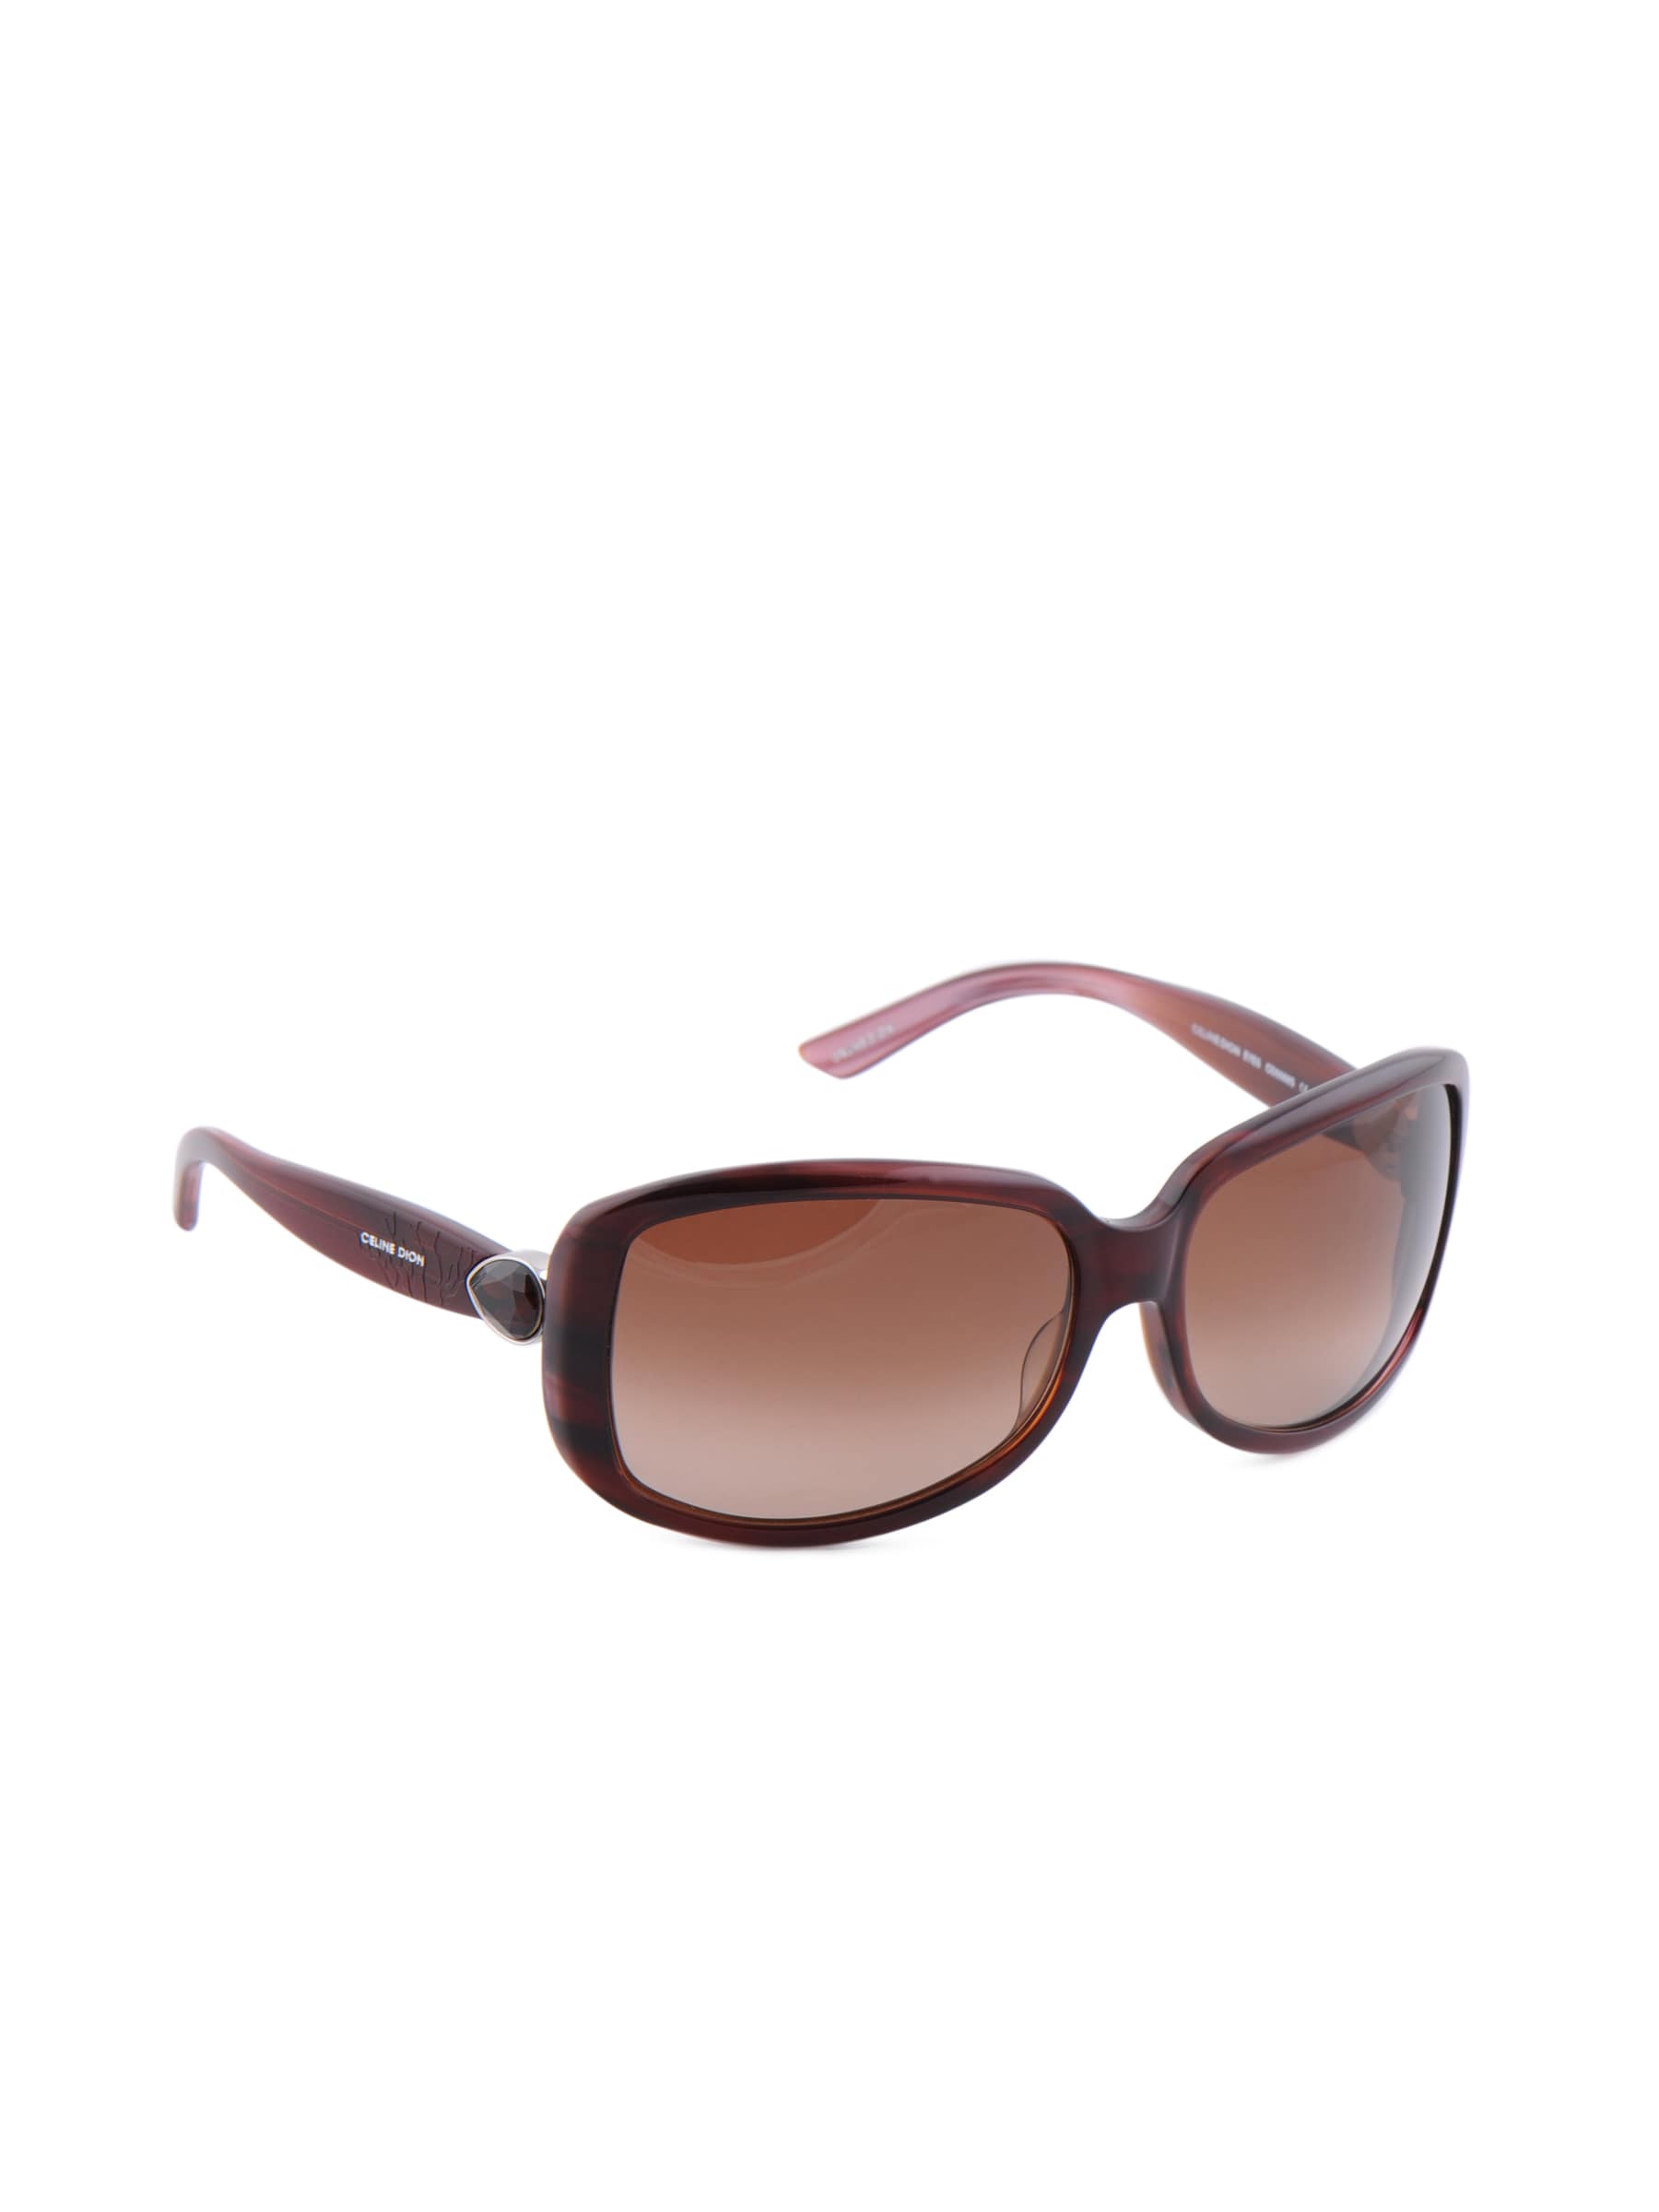 Celine Dion Women Brown Frame Sunglasses